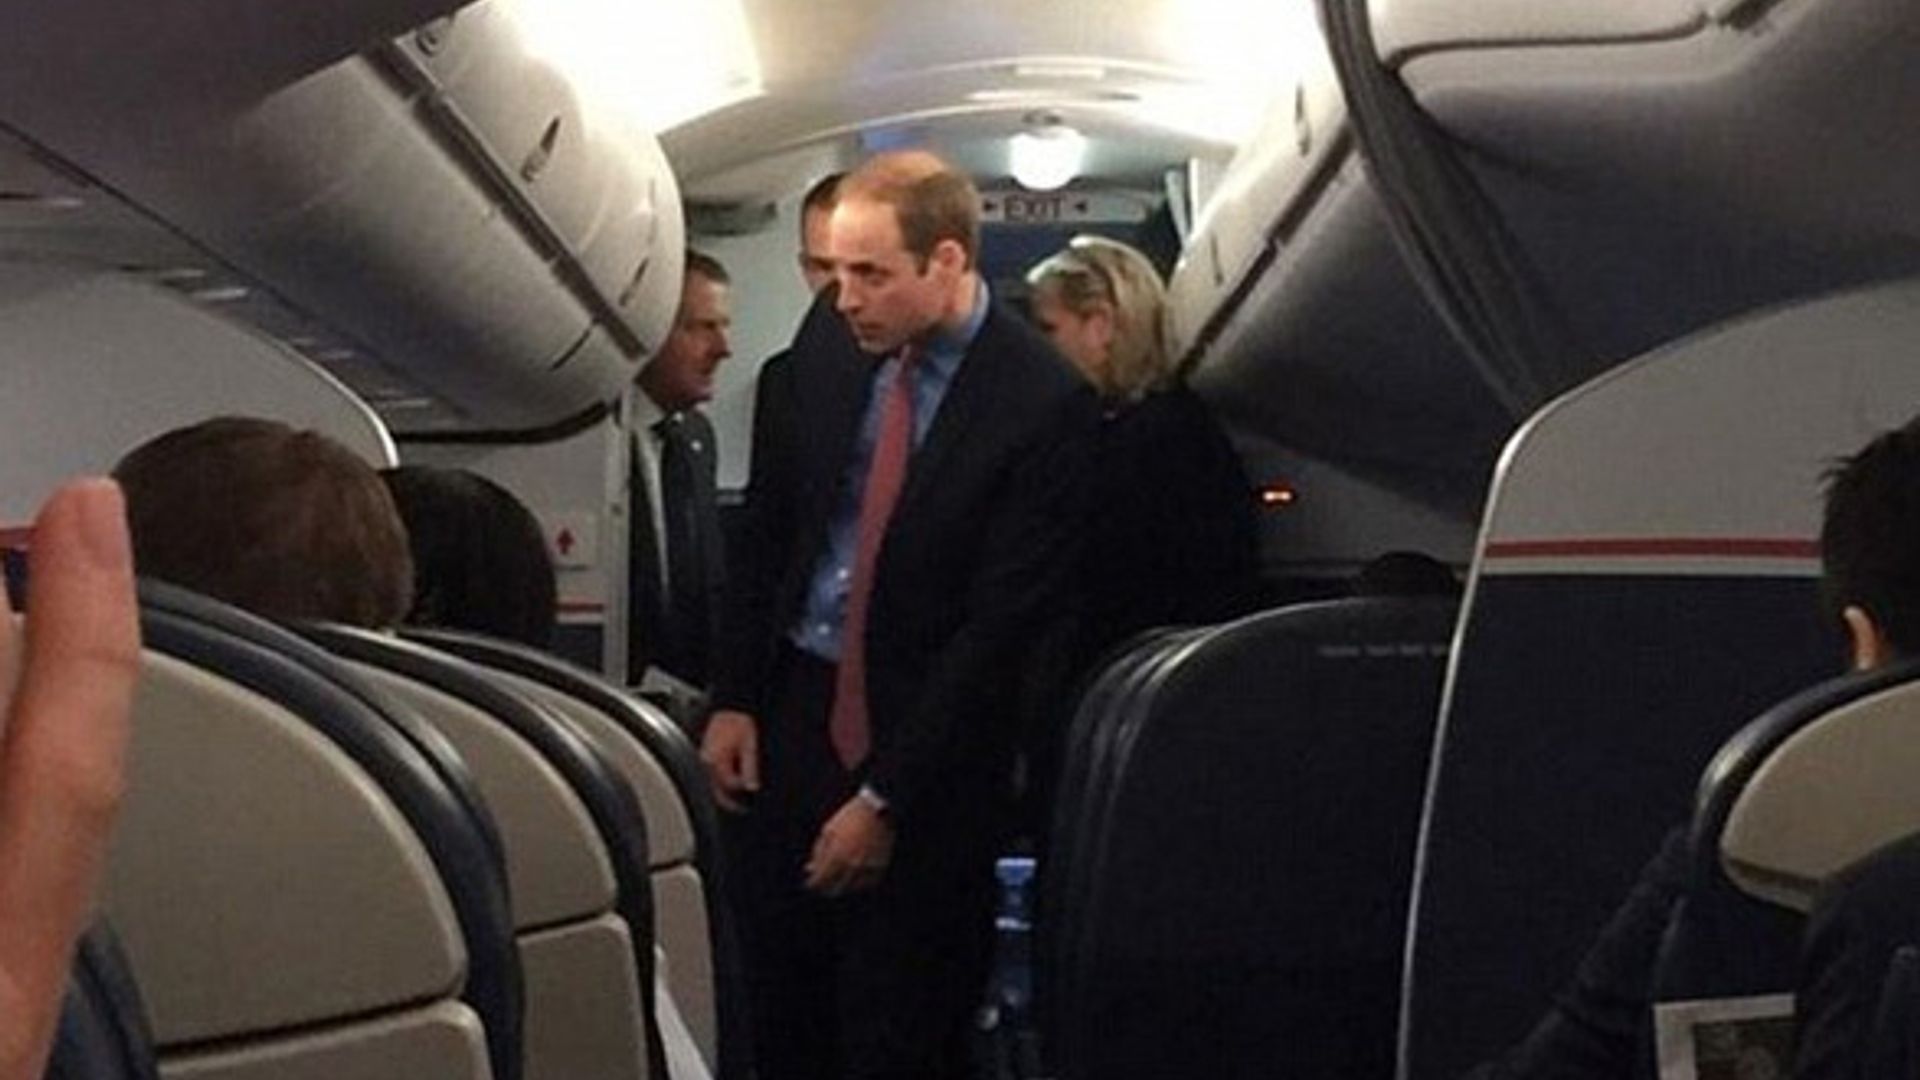 Prince William thrills fellow passengers on DC shuttle flight